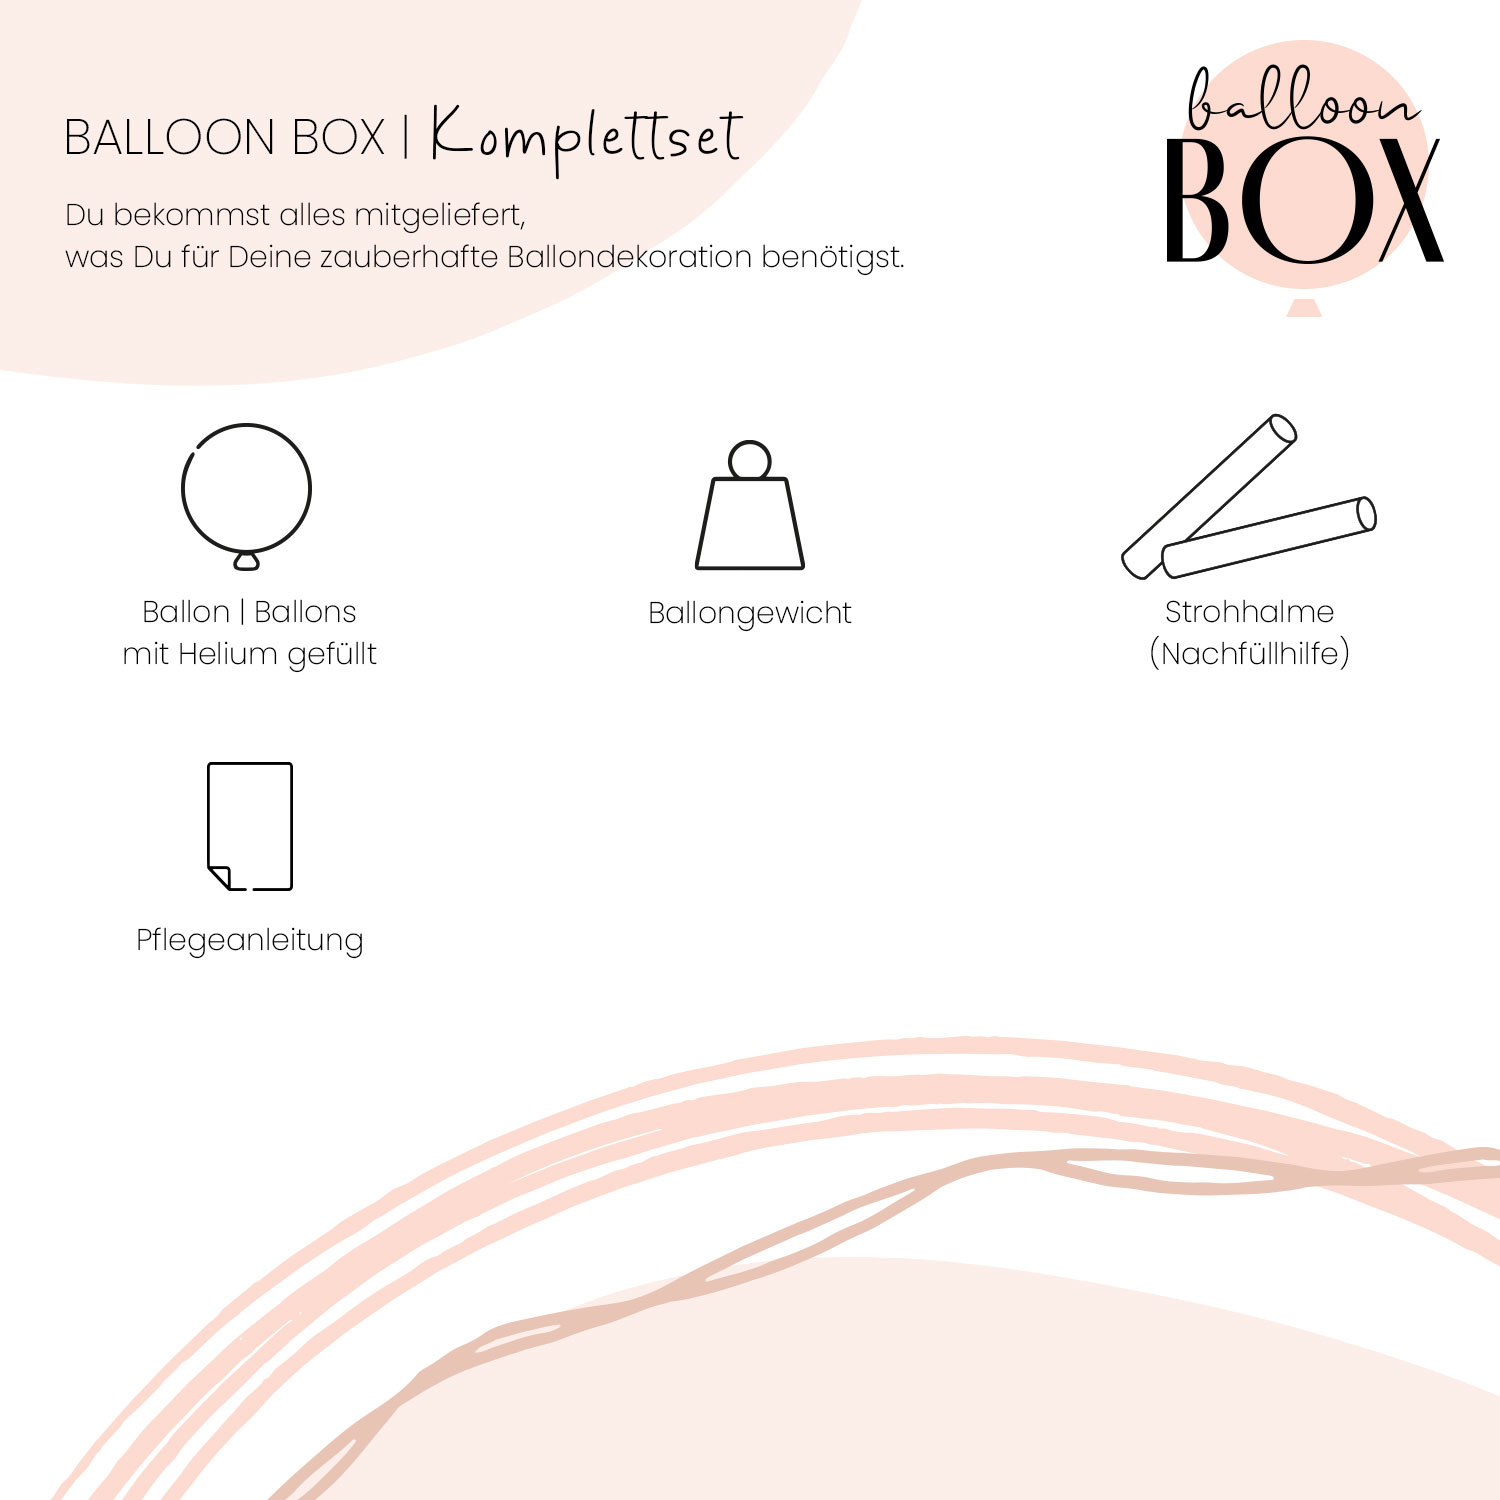 Heliumballon in a Box - XOXO Love